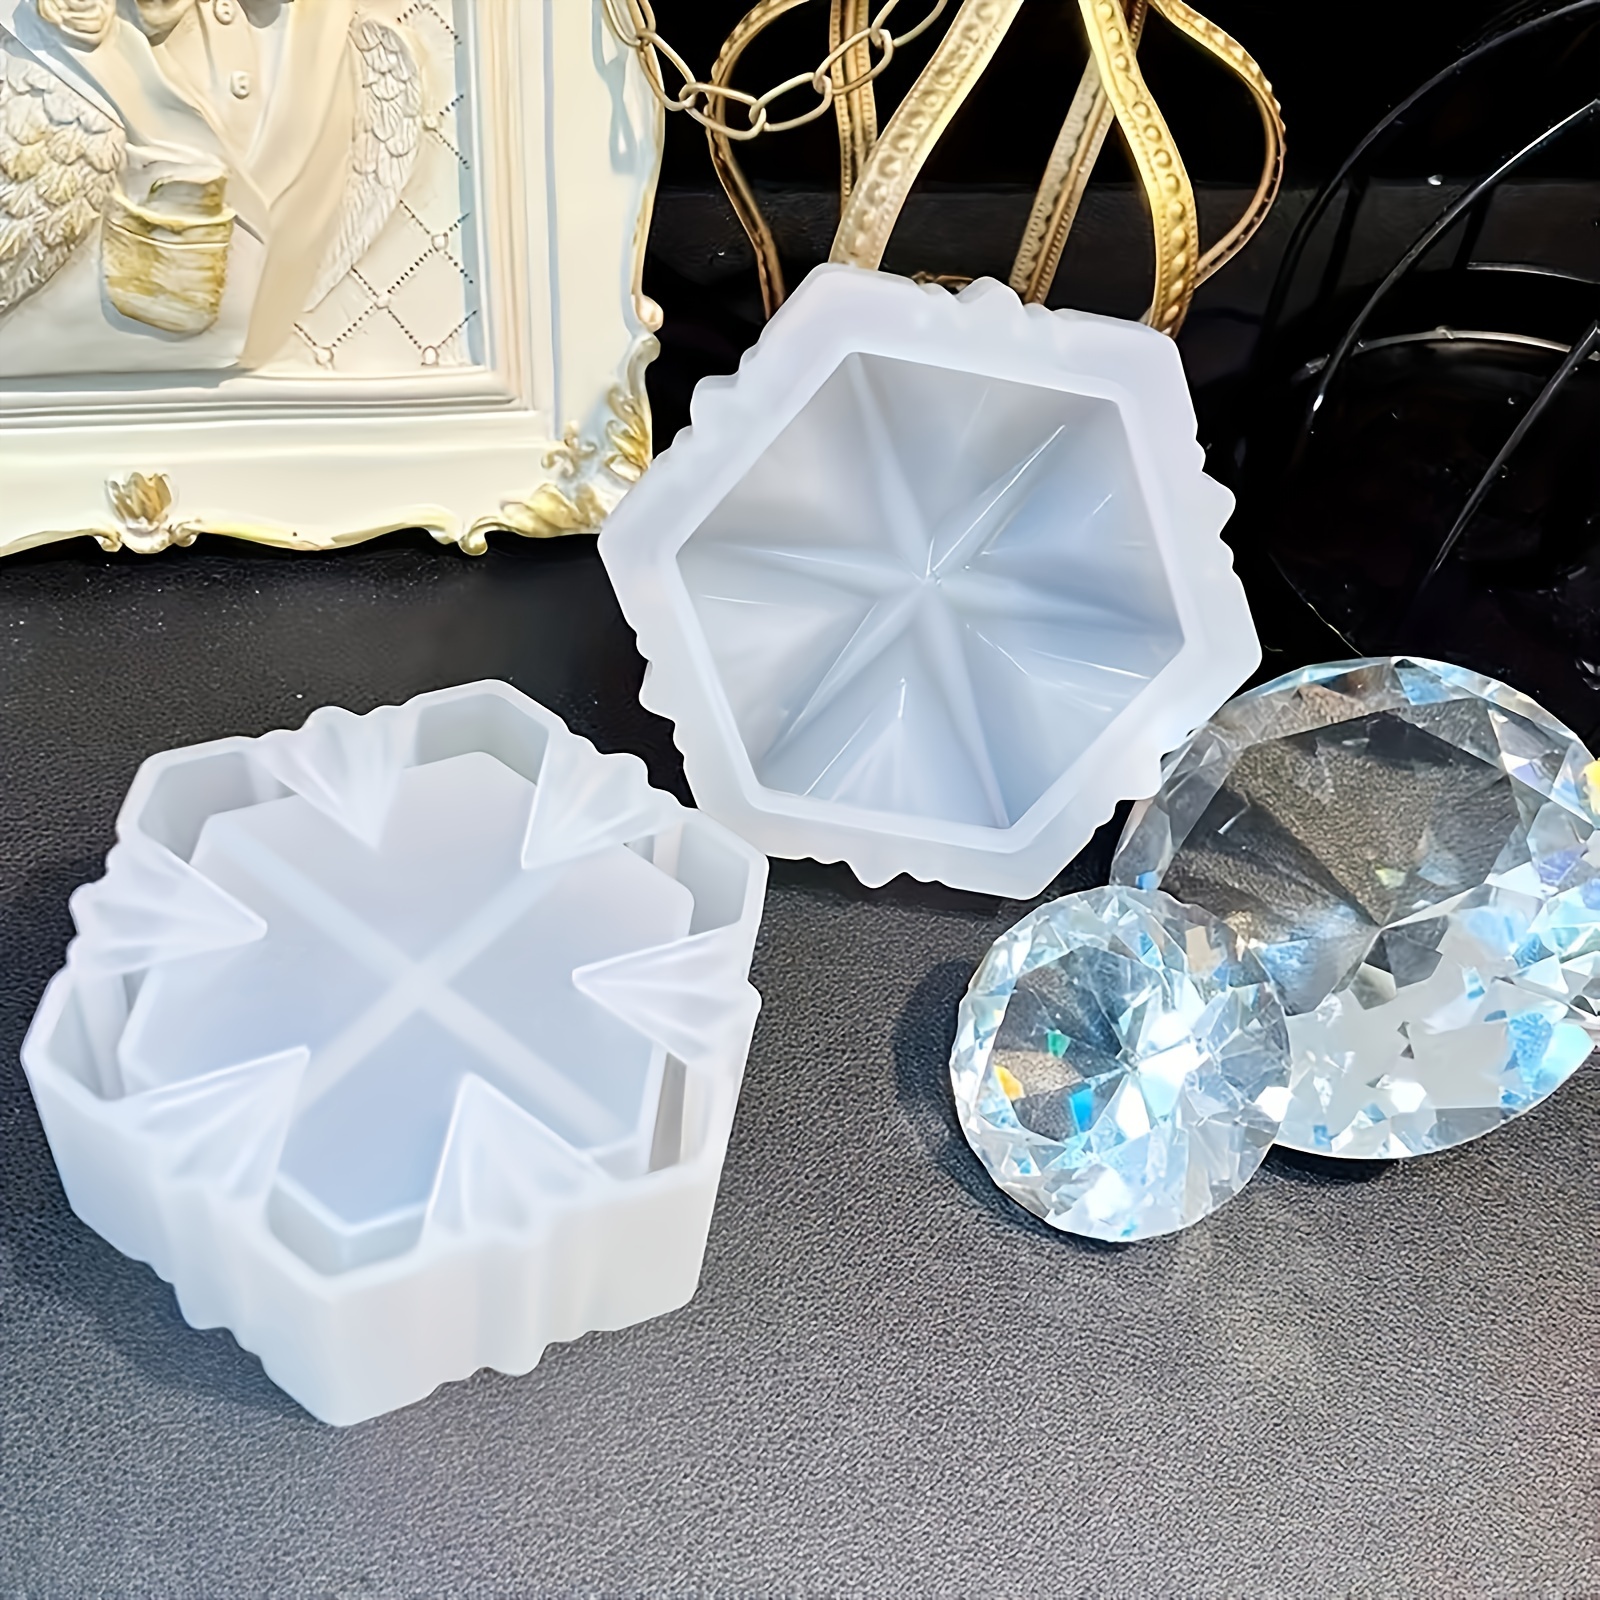 iSuperb 3 Pcs Jewelry Box Resin Molds Crown Egg Pyramid Shaped Creative  Storage Box Silicone Molds Epoxy Resin Casting Molds for DIY Jewelry Box  Craft